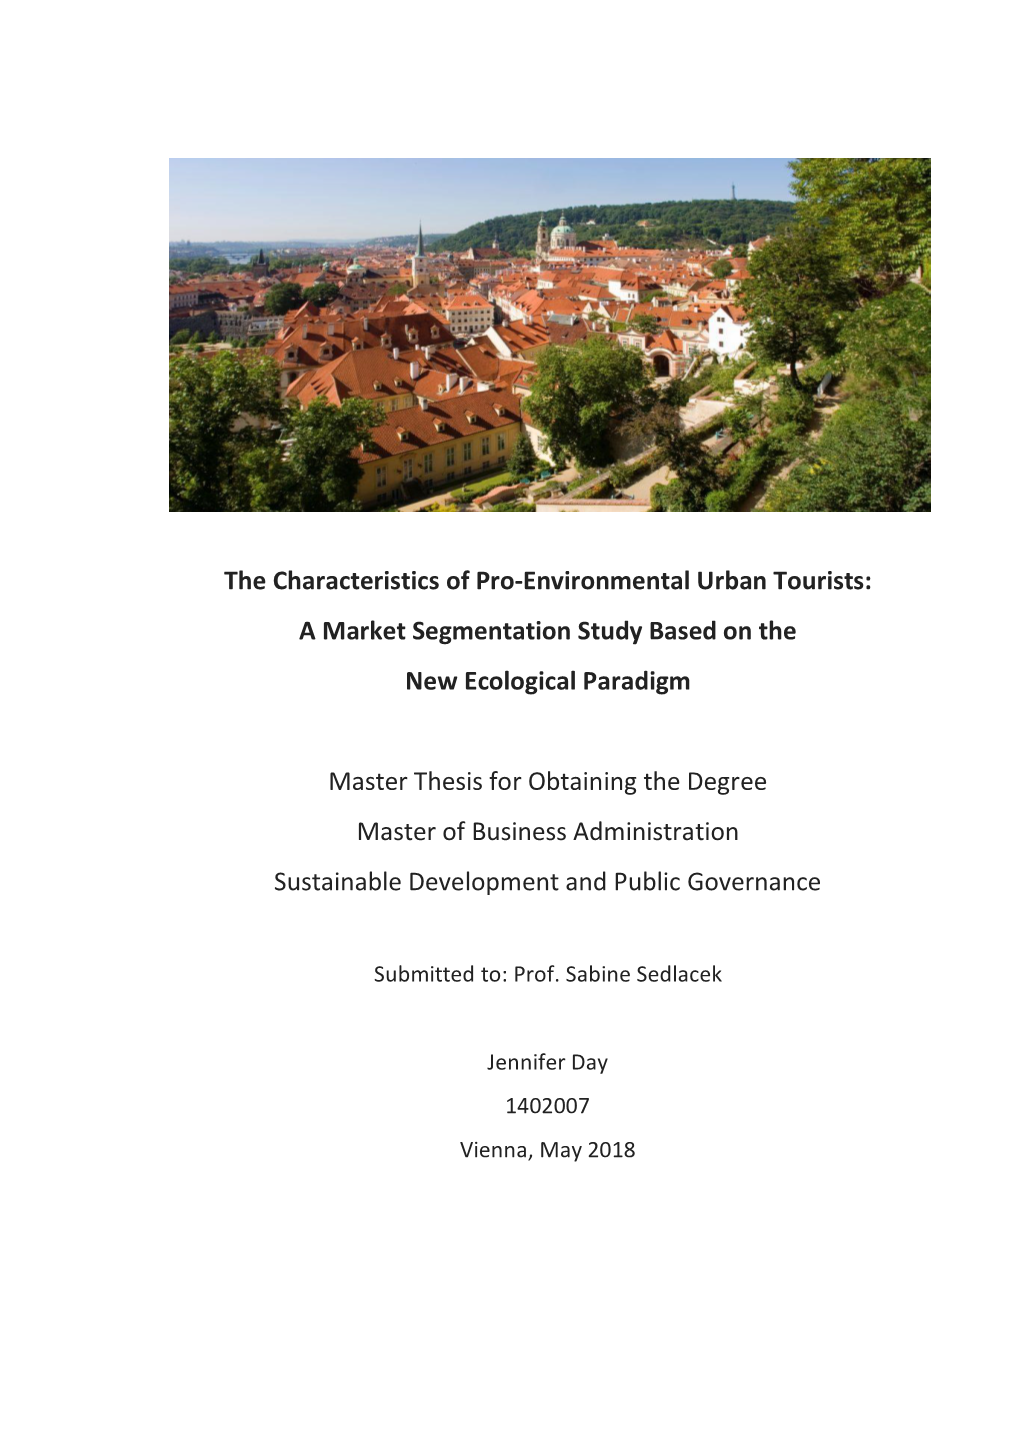 The Characteristics of Pro-Environmental Urban Tourists: a Market Segmentation Study Based on the New Ecological Paradigm